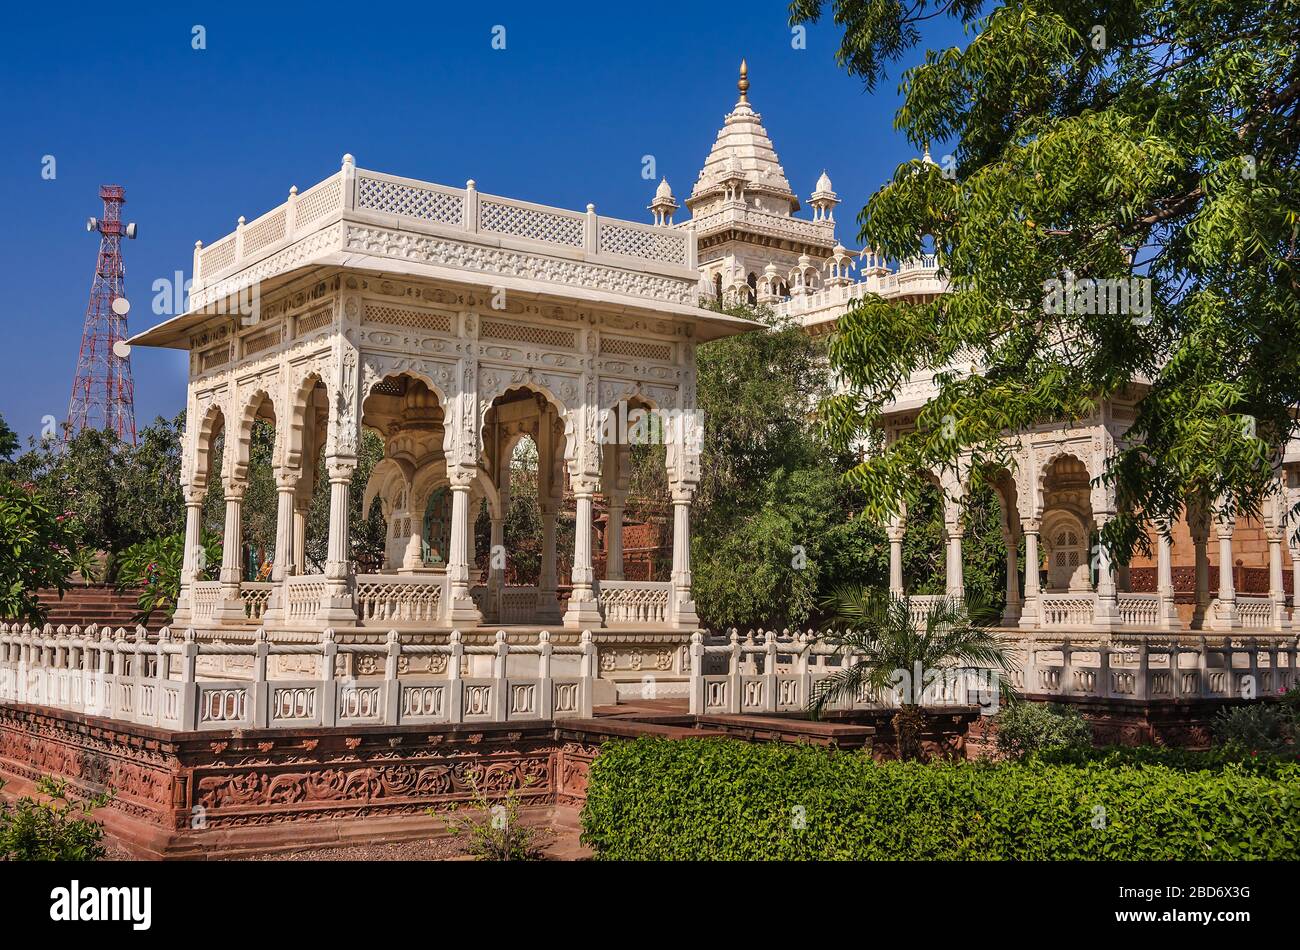 JODHPUR, INDIA – DIC. 02, 2019: Famoso mausoleo de Jaswant Thada en Rajasthan, un monumento de mármol blanco comúnmente conocido como Taj Mahal de Mewar. Foto de stock